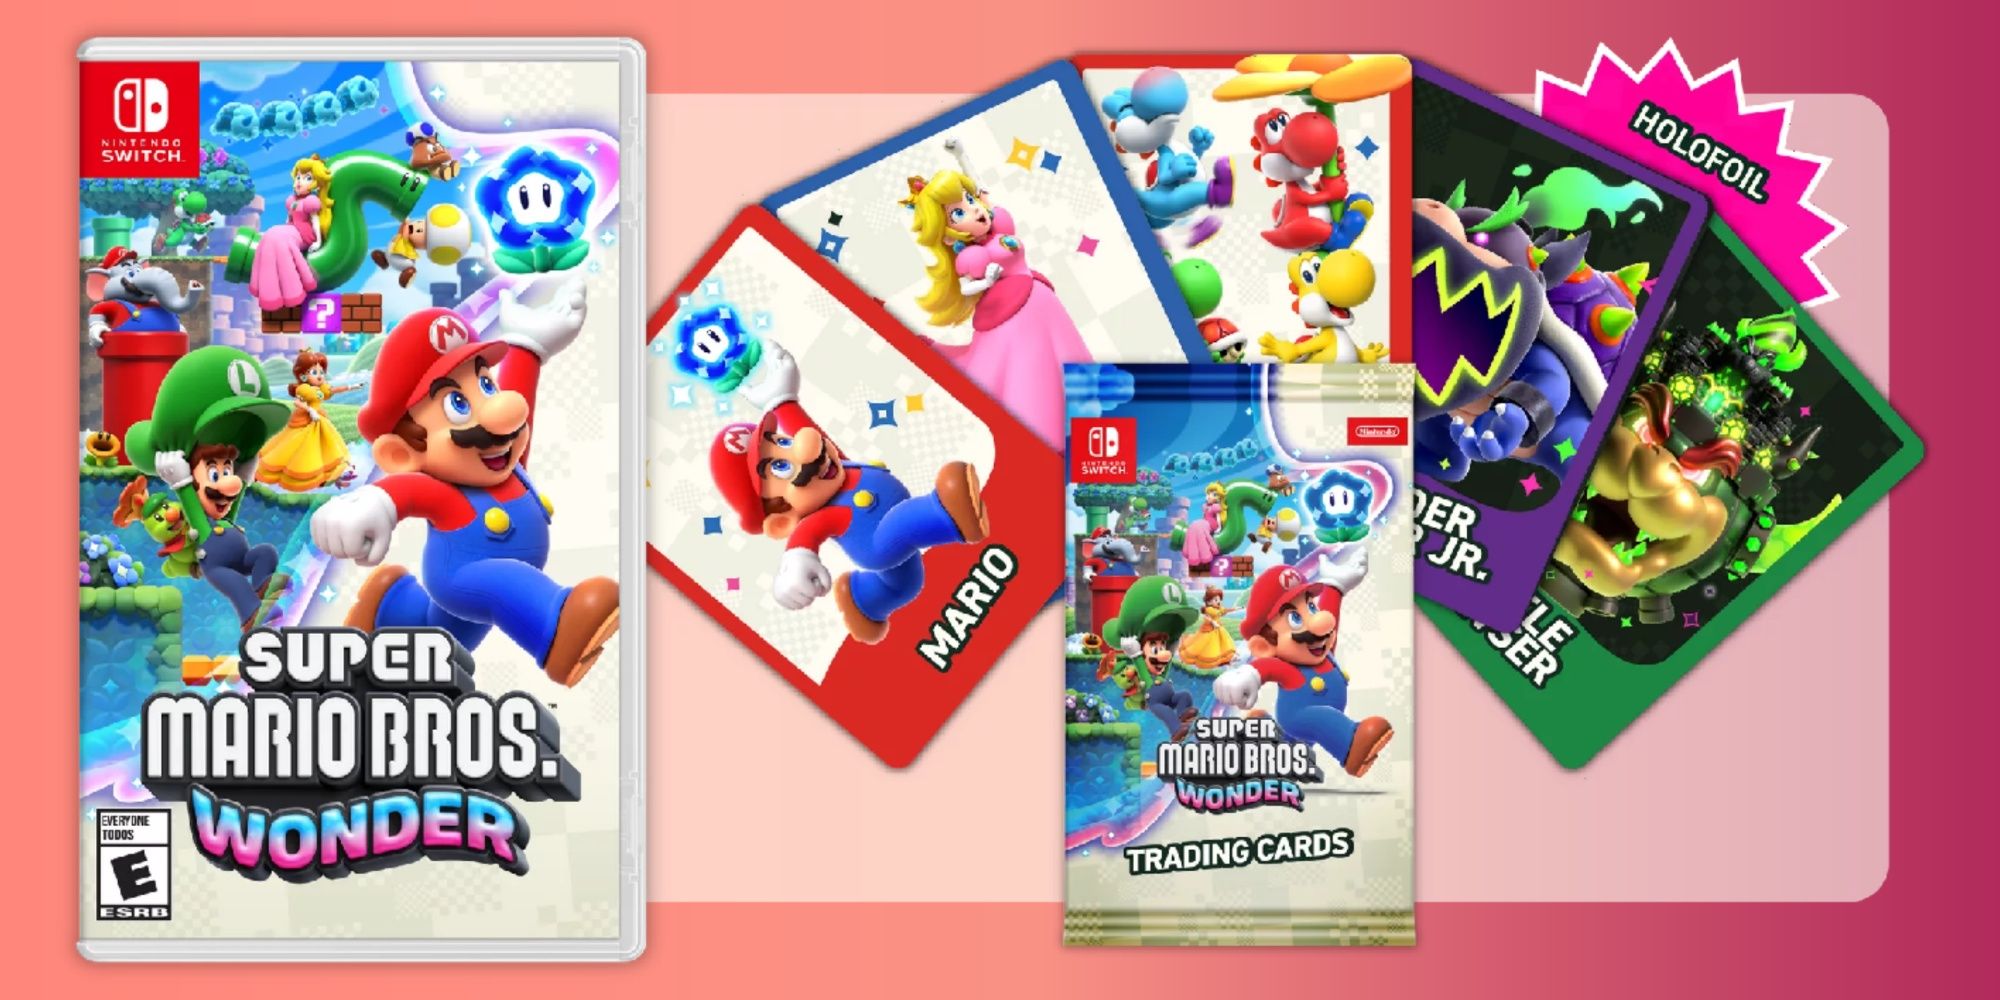 Super Mario Bros. Wonder Pre-Orders Include Free Trading Cards At Walmart